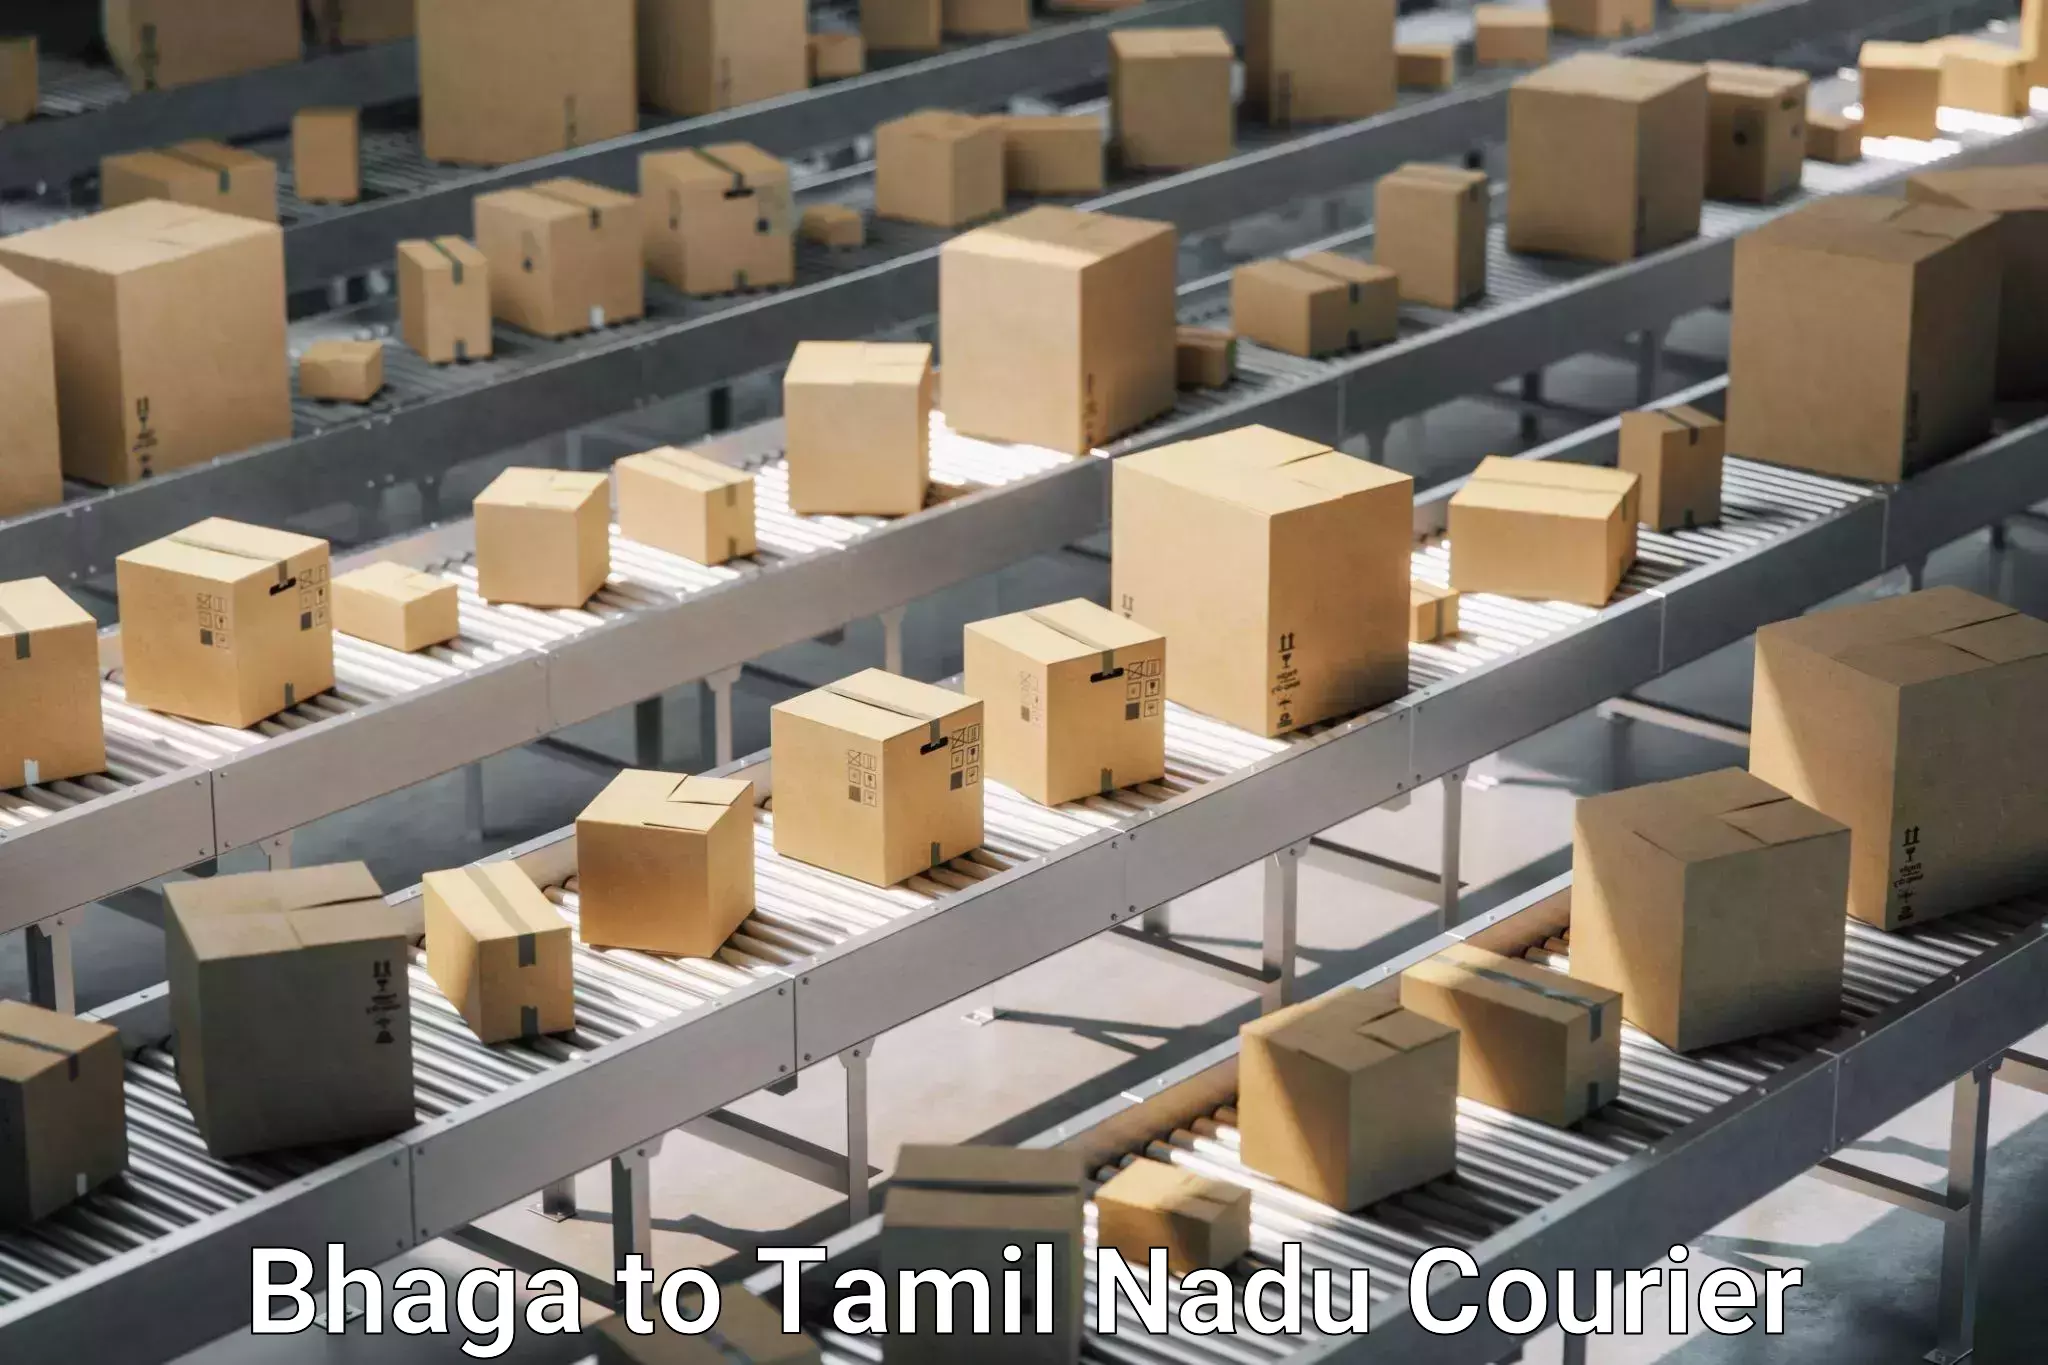 Trusted moving company Bhaga to Tamil Nadu